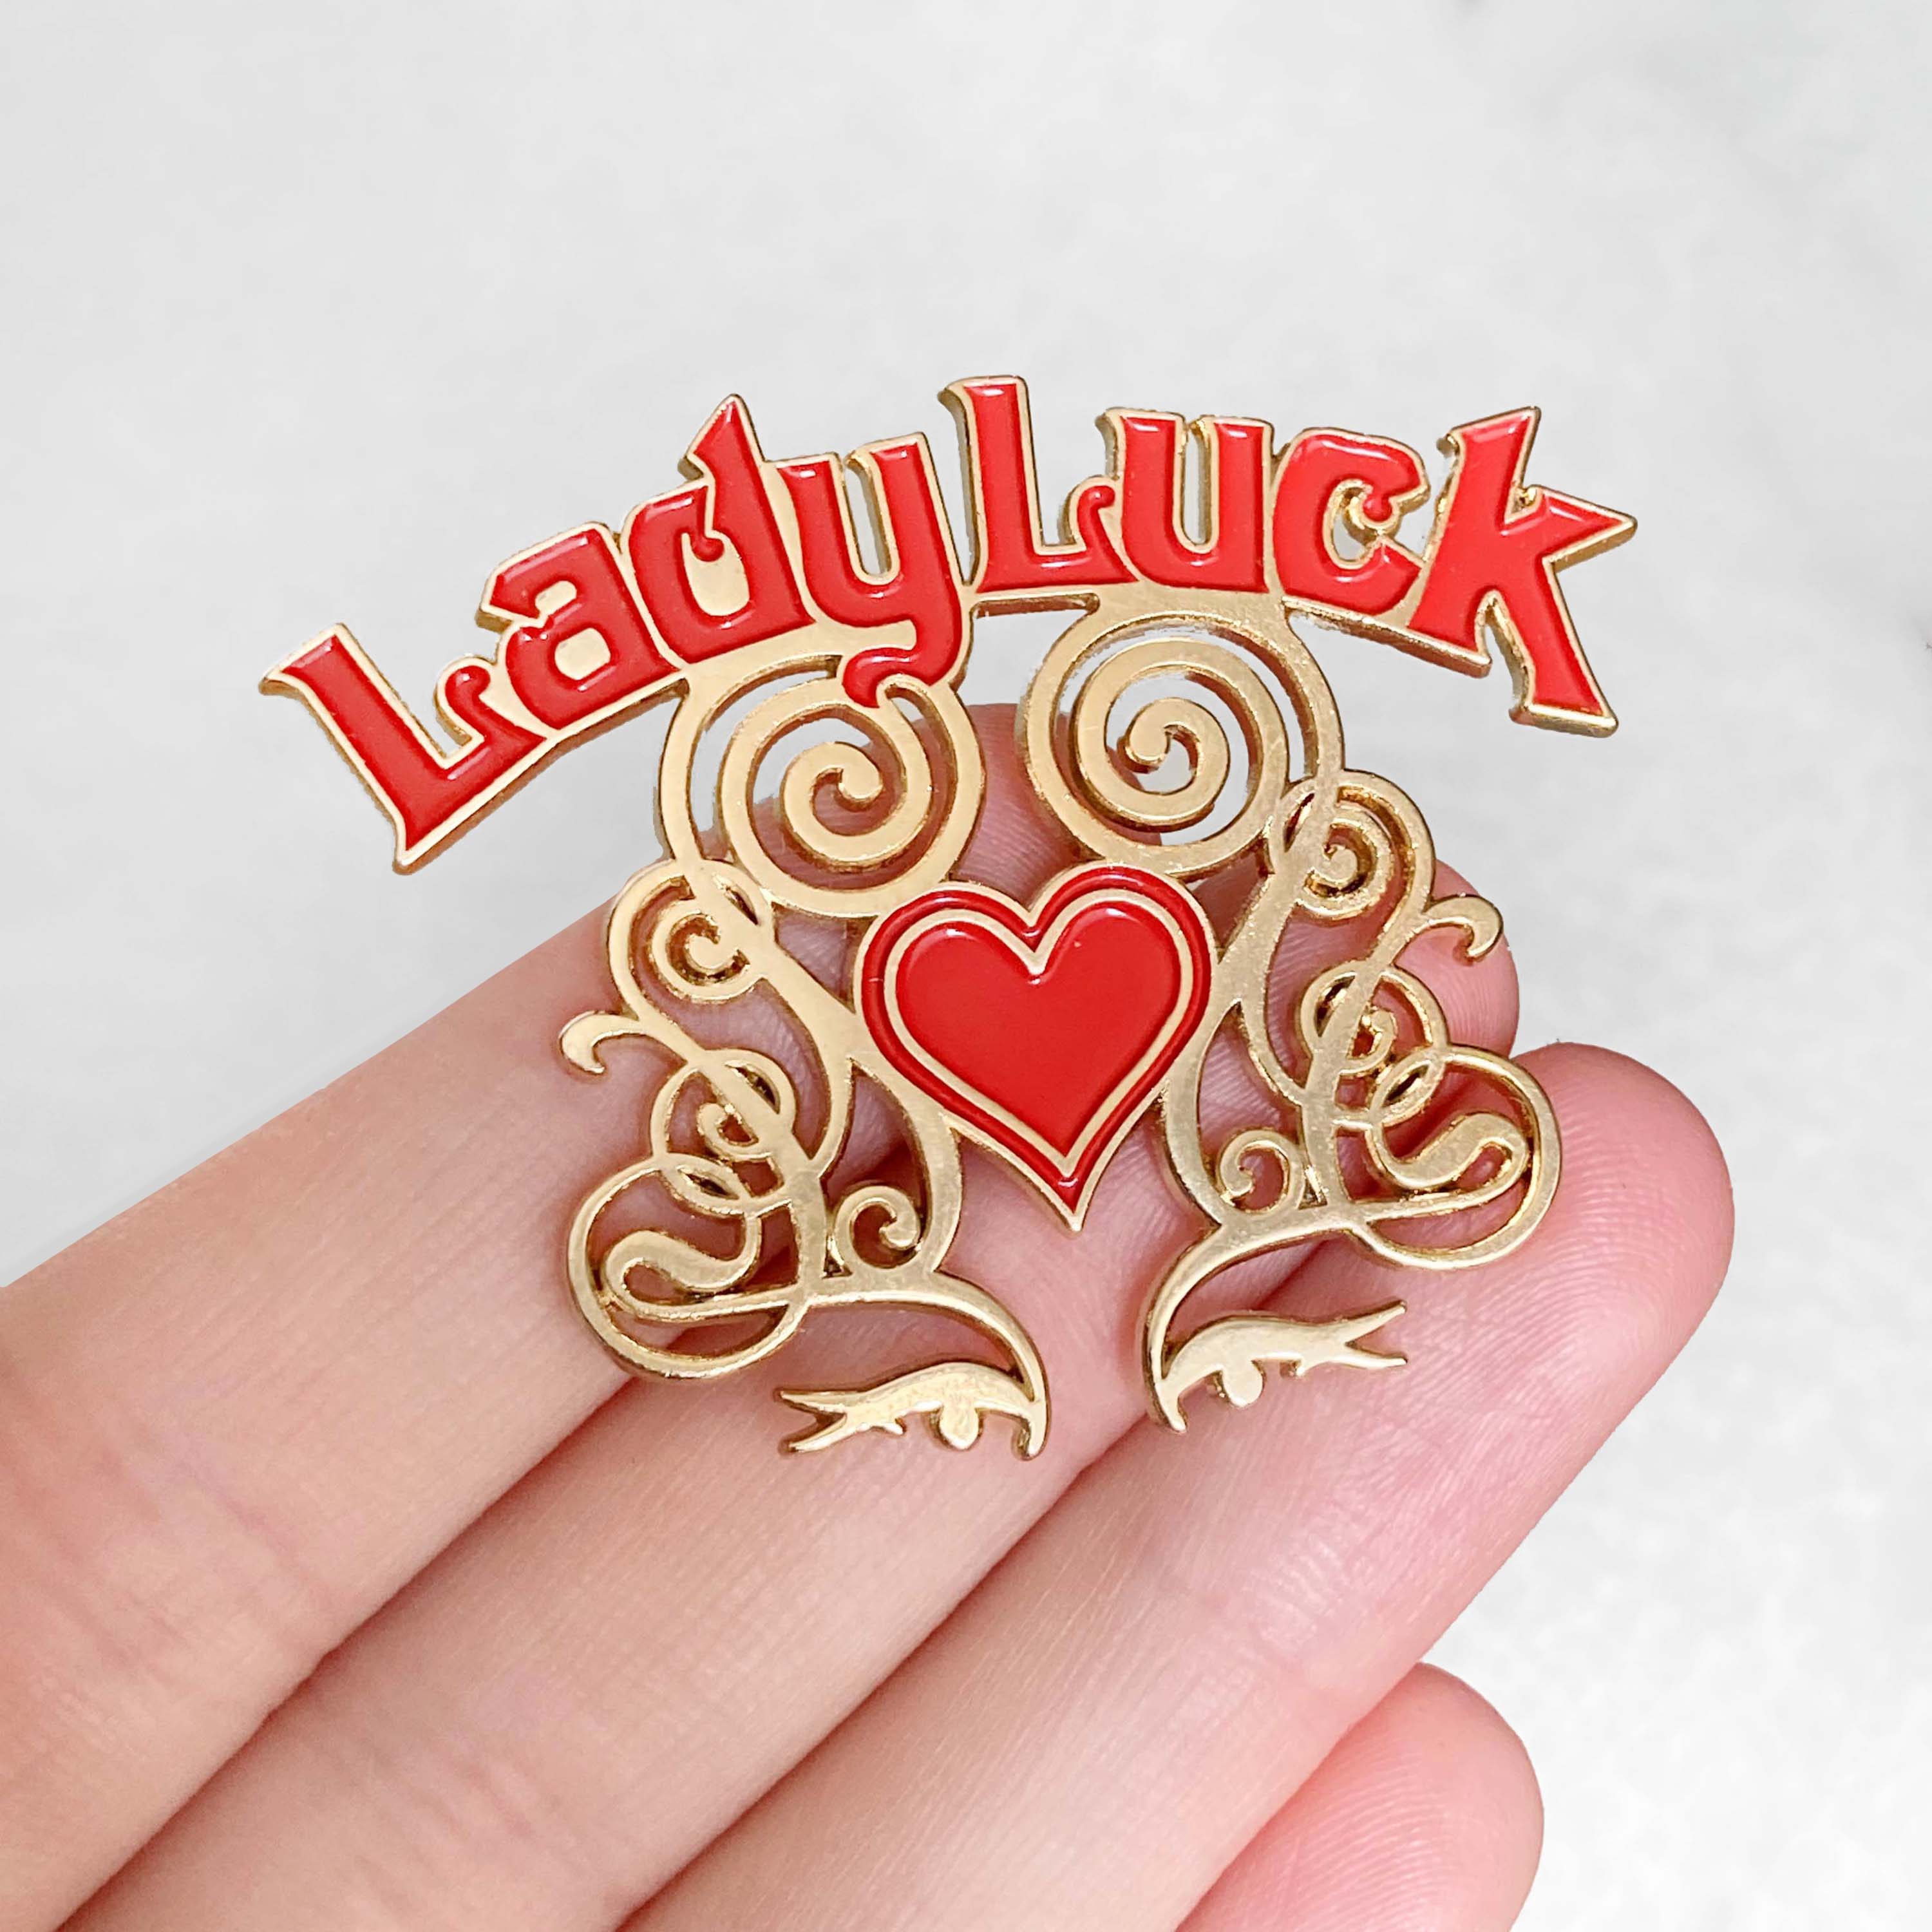 Lady Luck pin